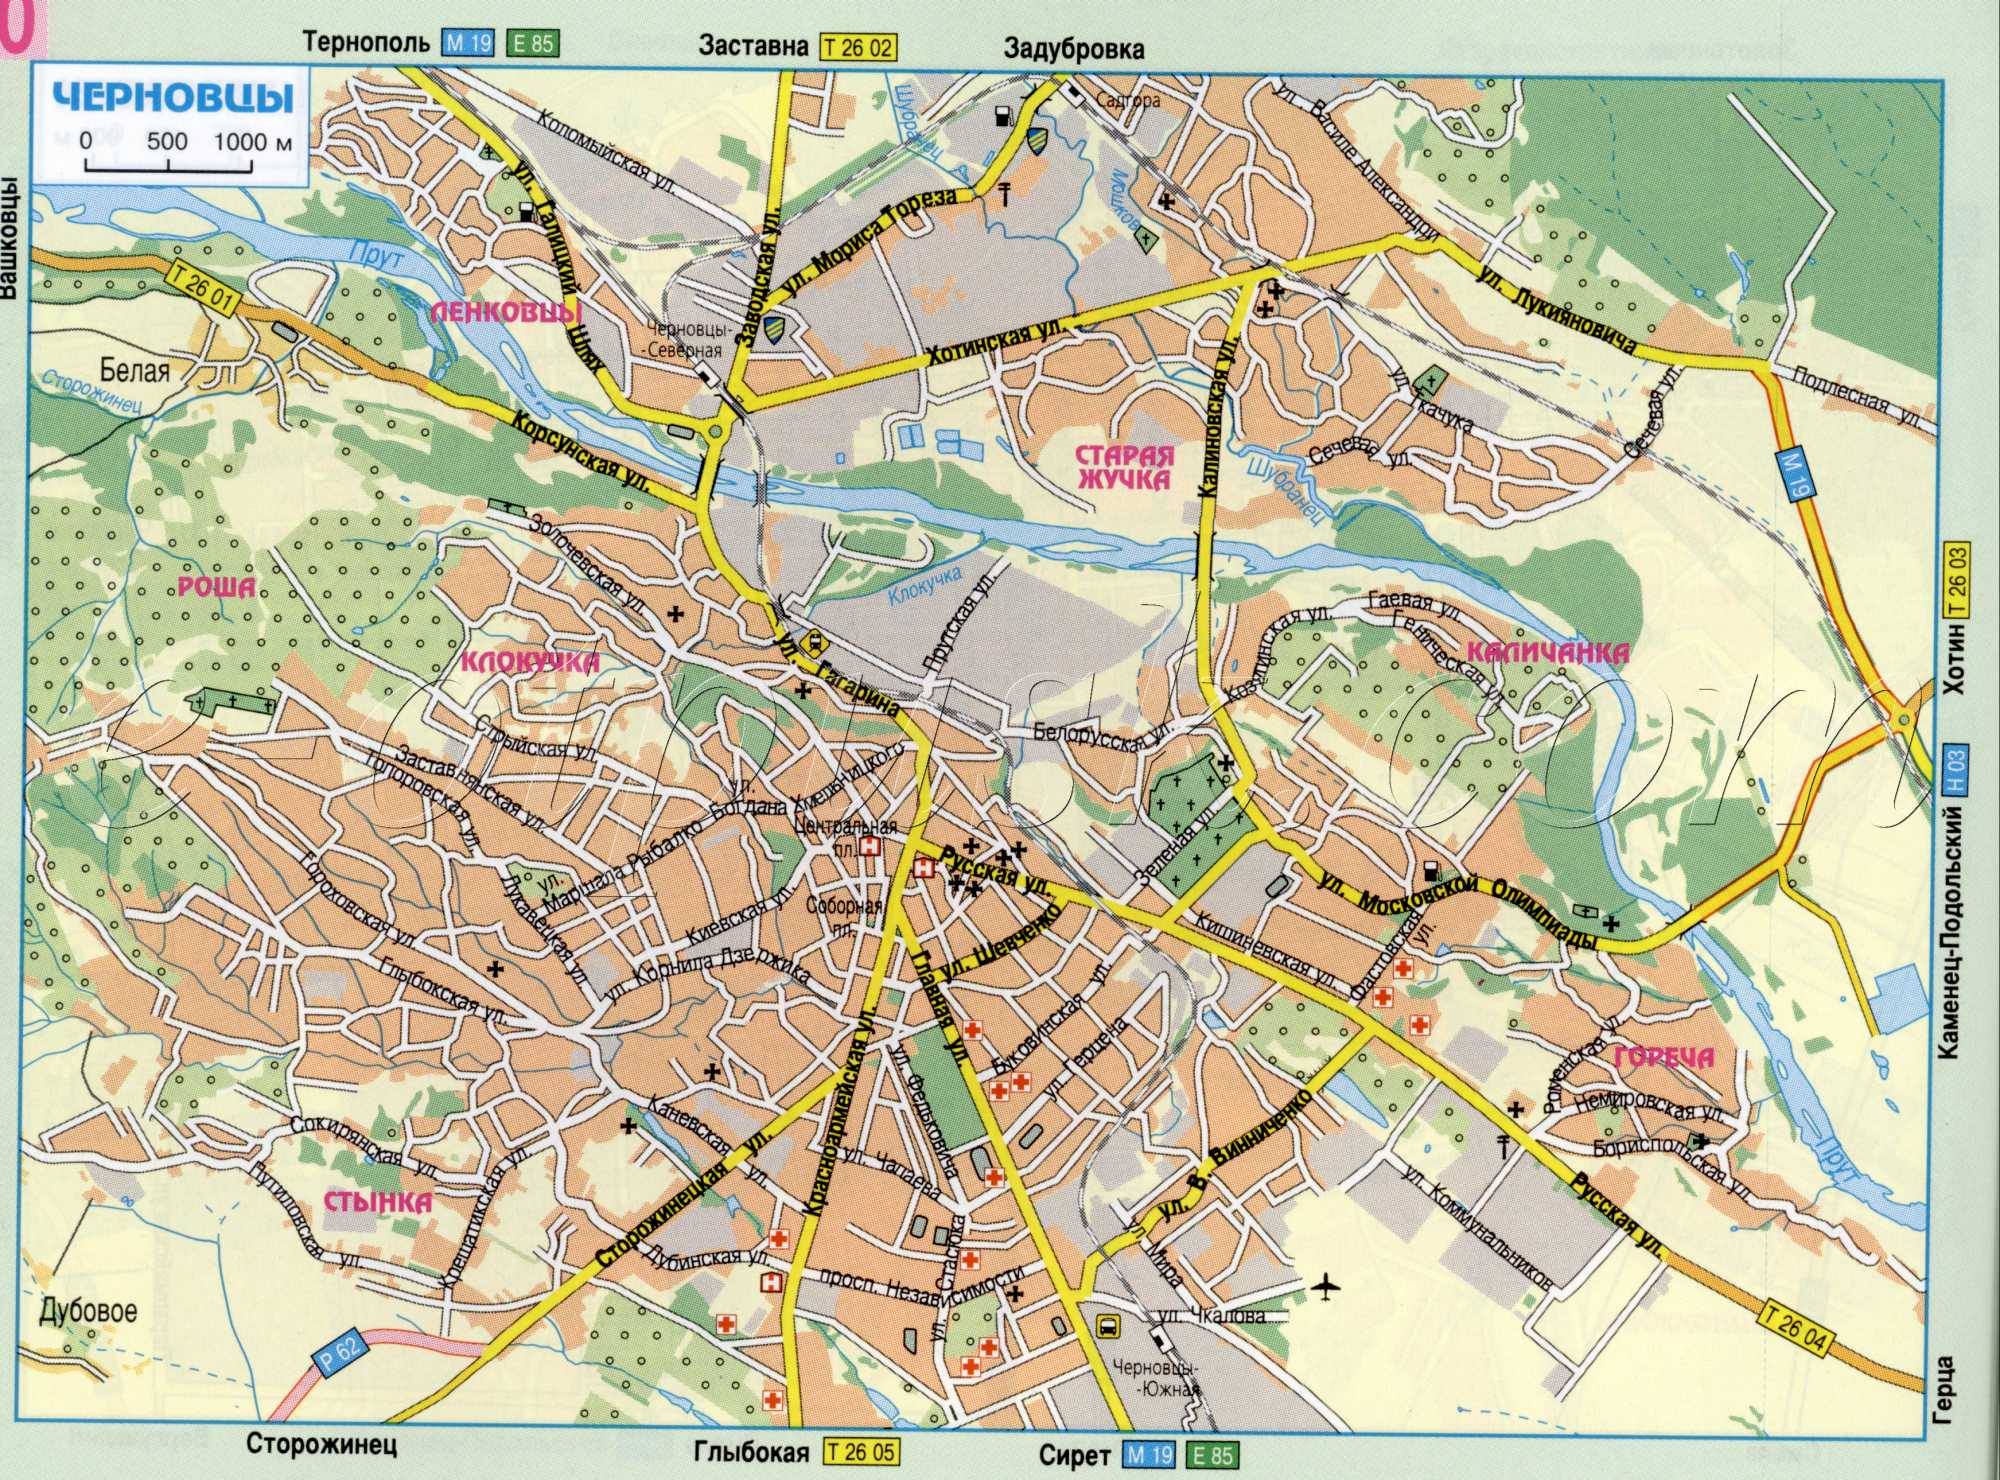 Map of Chernivtsi (Ukraine map of Chernovtsy roads). Detailed road map download for free